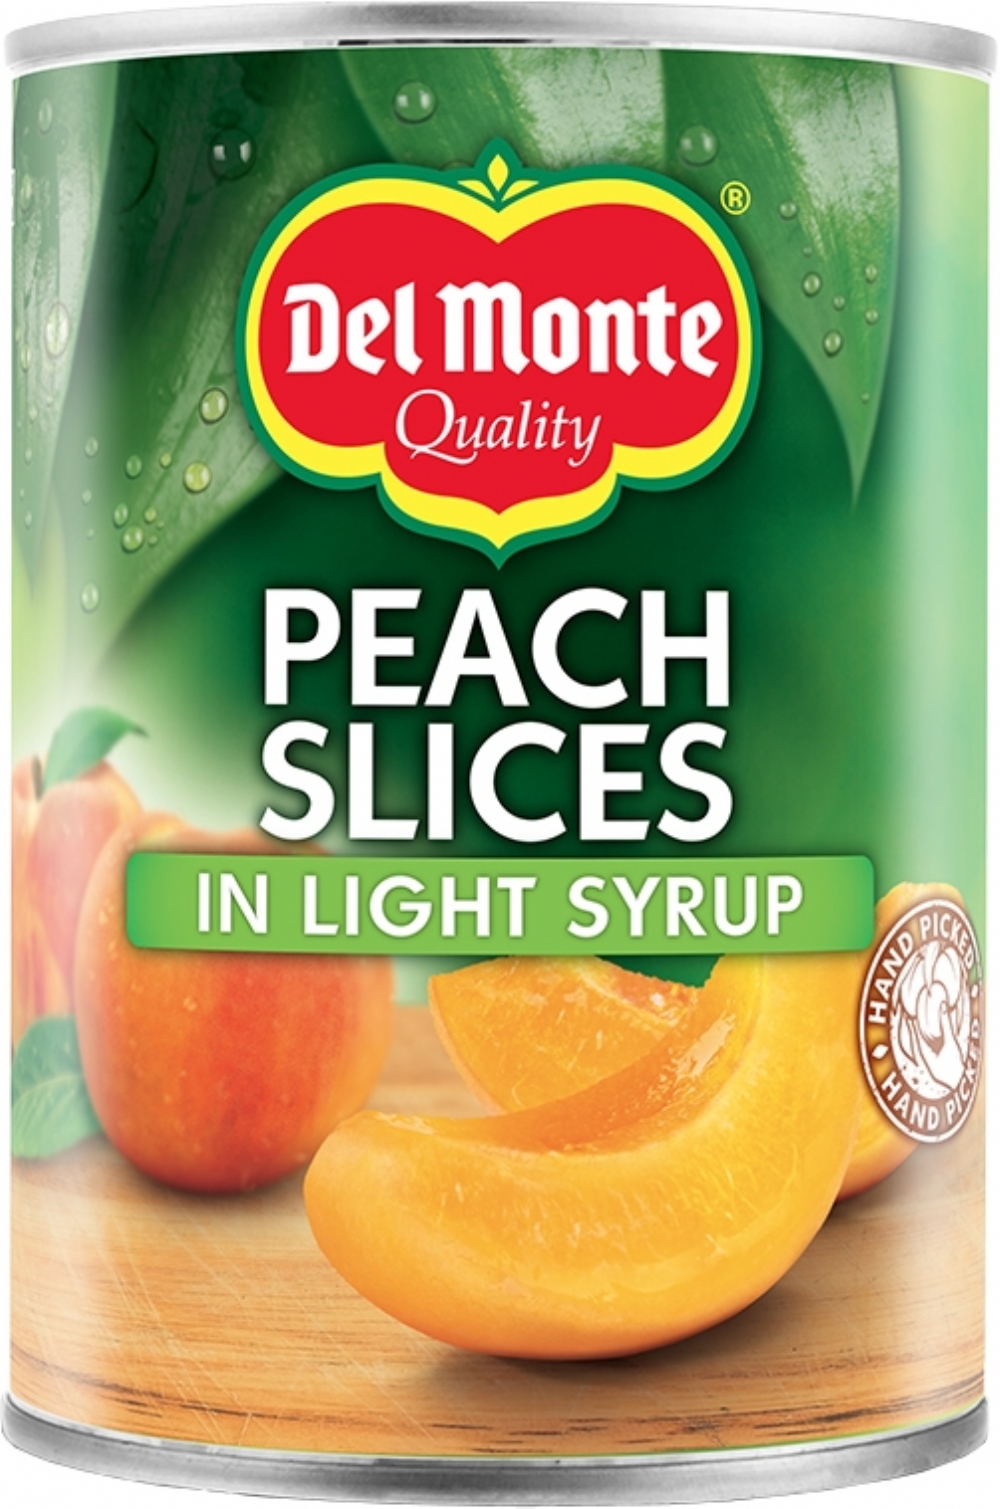 DEL MONTE Peach Slices in Light Syrup 420g